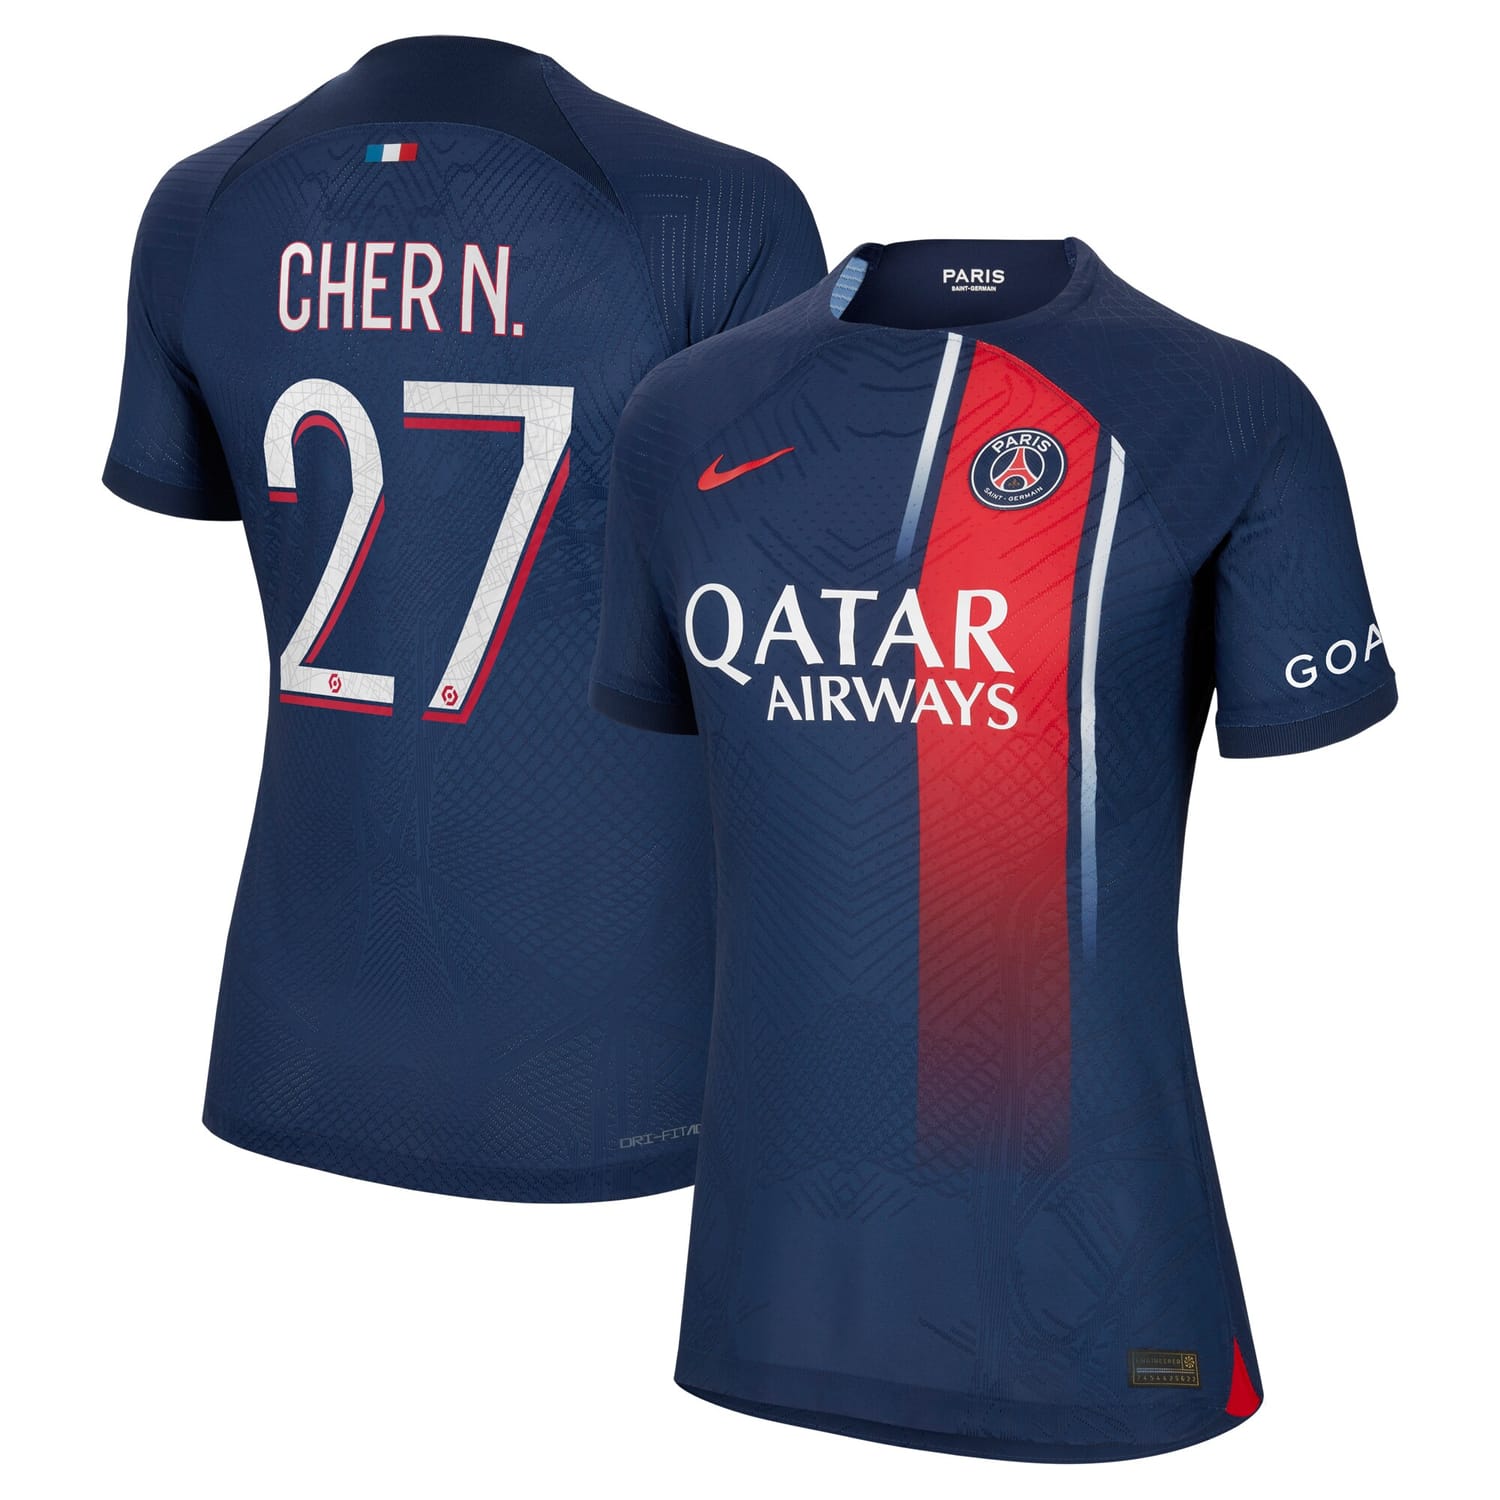 Ligue 1 Paris Saint-Germain Home Authentic Jersey Shirt 2023-24 player Cher N. 27 printing for Women